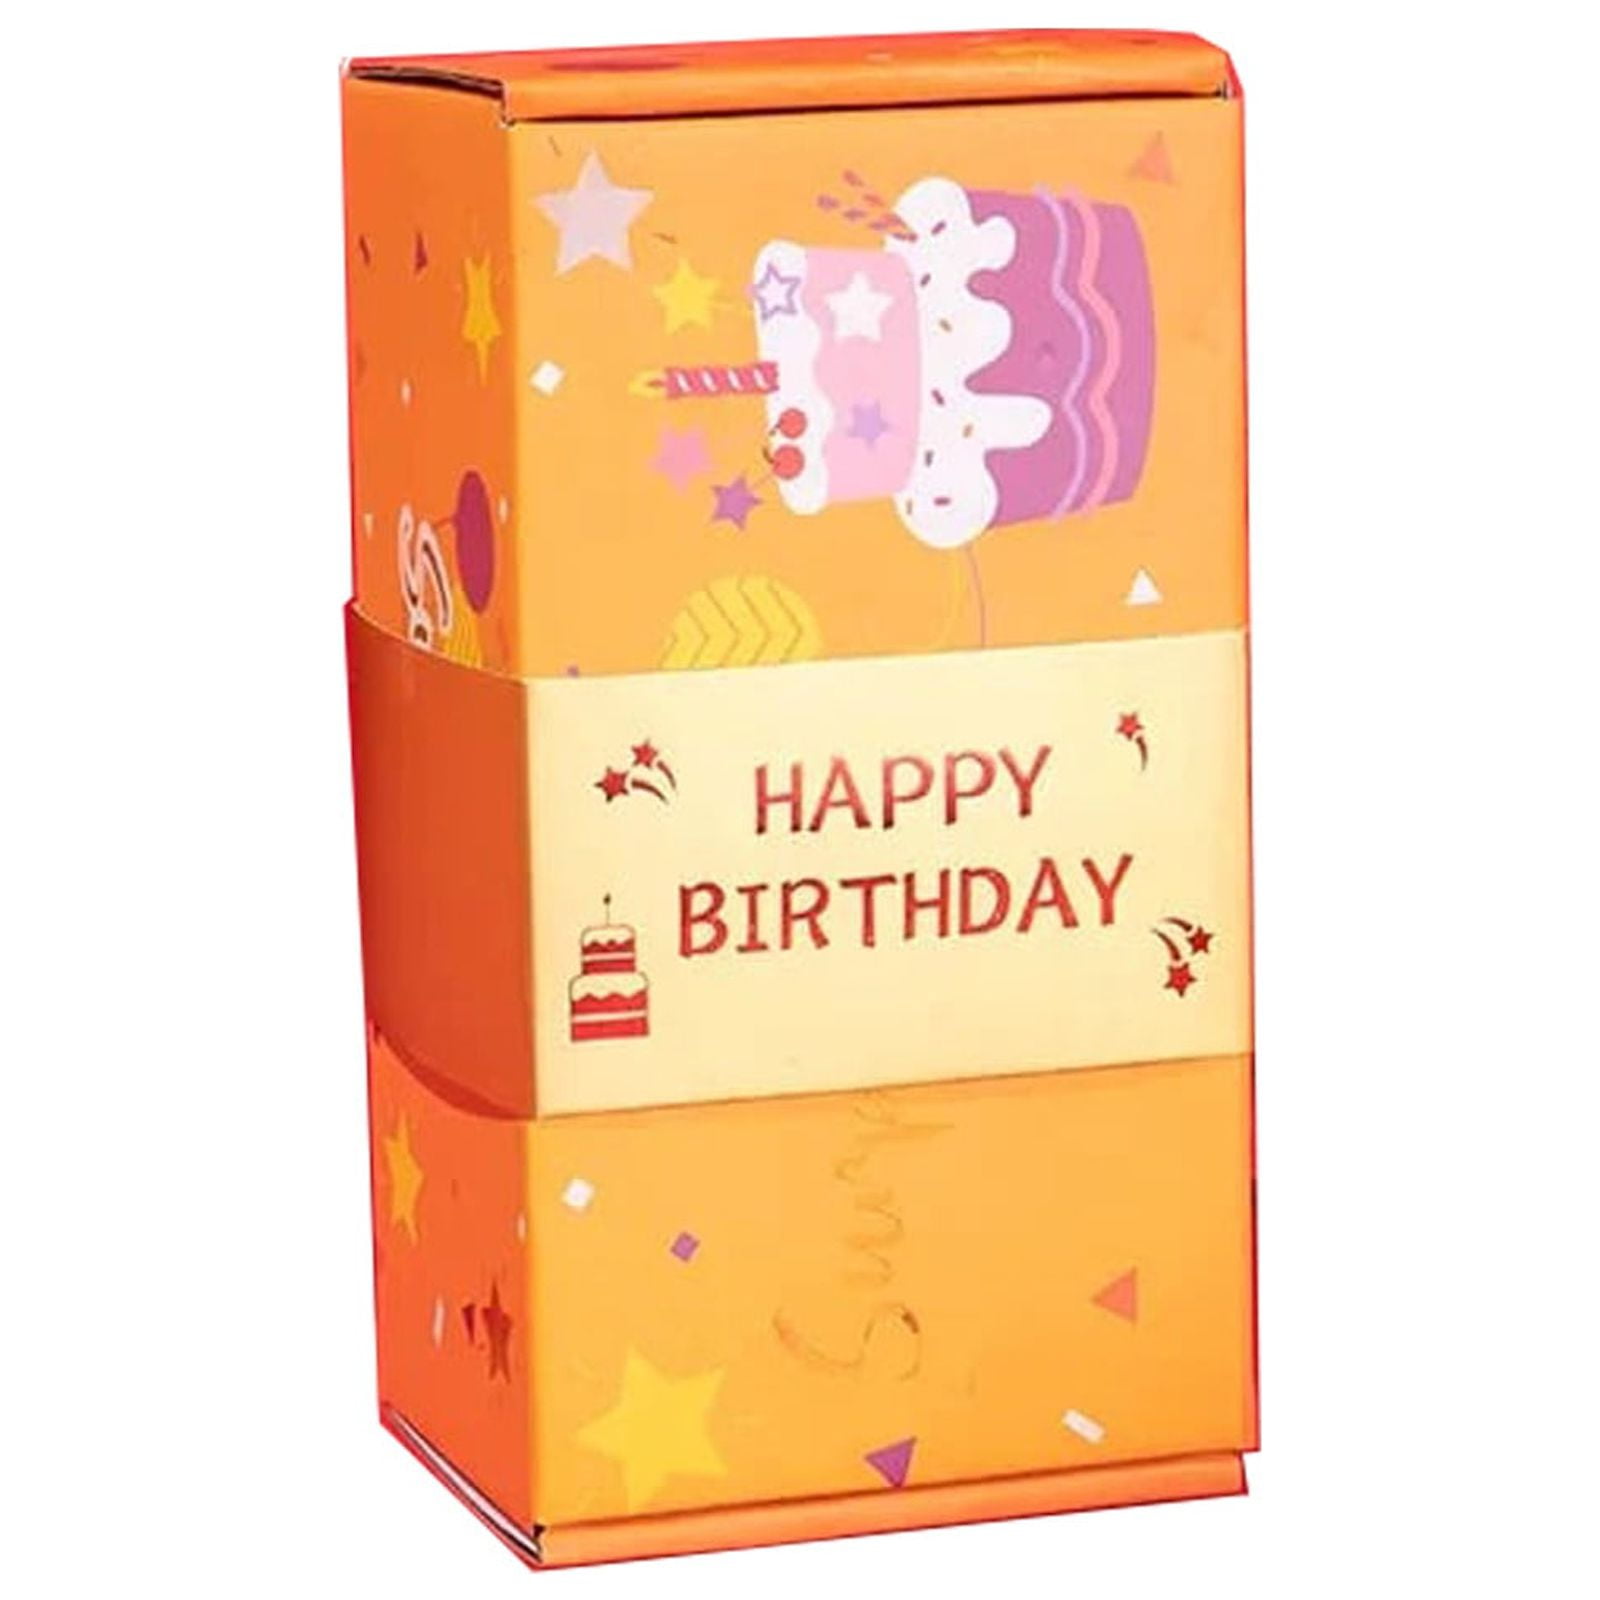 ZEXILILA Surprise Gift Box Explosion Money Box, Surprise Box Gift Box for Money Explosion Box, 10 Bounces Folding Bouncing Surprise Gift Box for